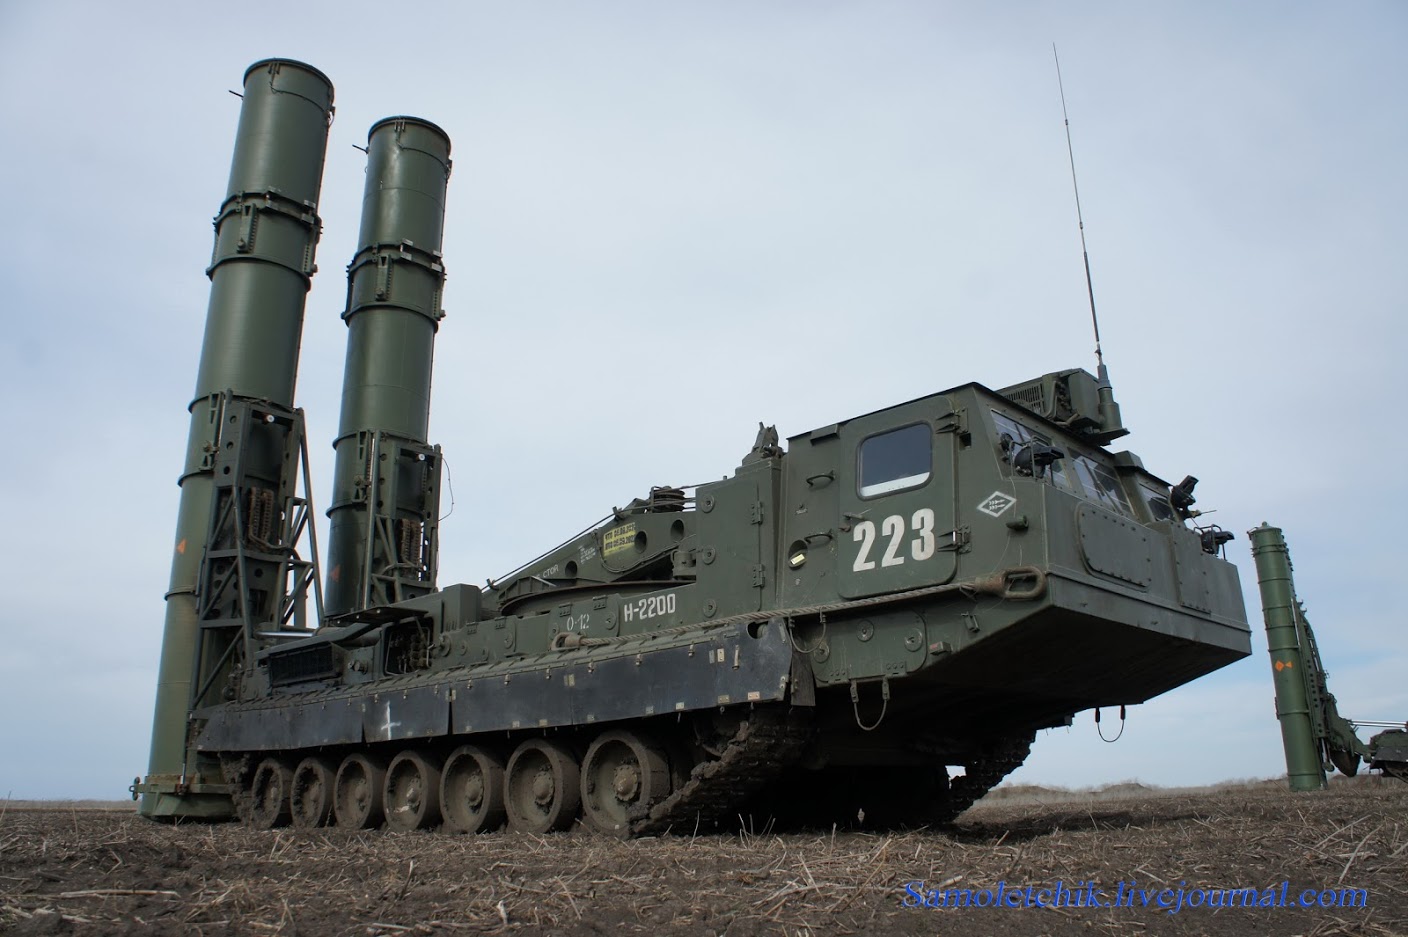 S-300VM: Το απόλυτο αντιβαλλιστικό σύστημα της ρωσικής αεράμυνας